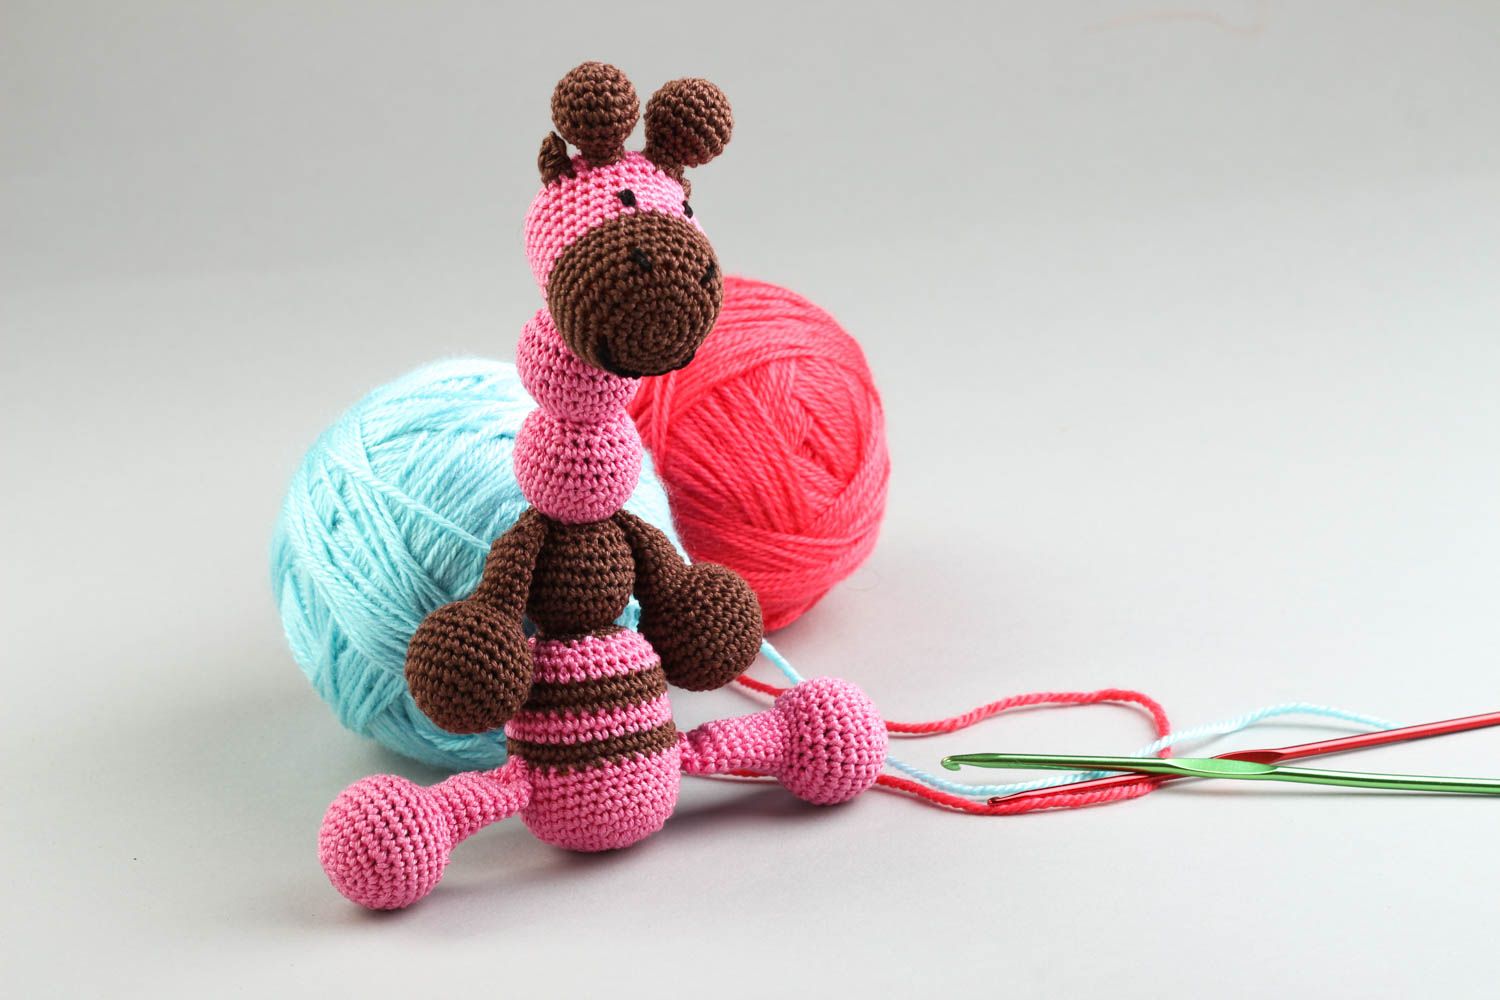 Handmade rattle toy designer toy for new born babies soft toys nursery decor photo 1